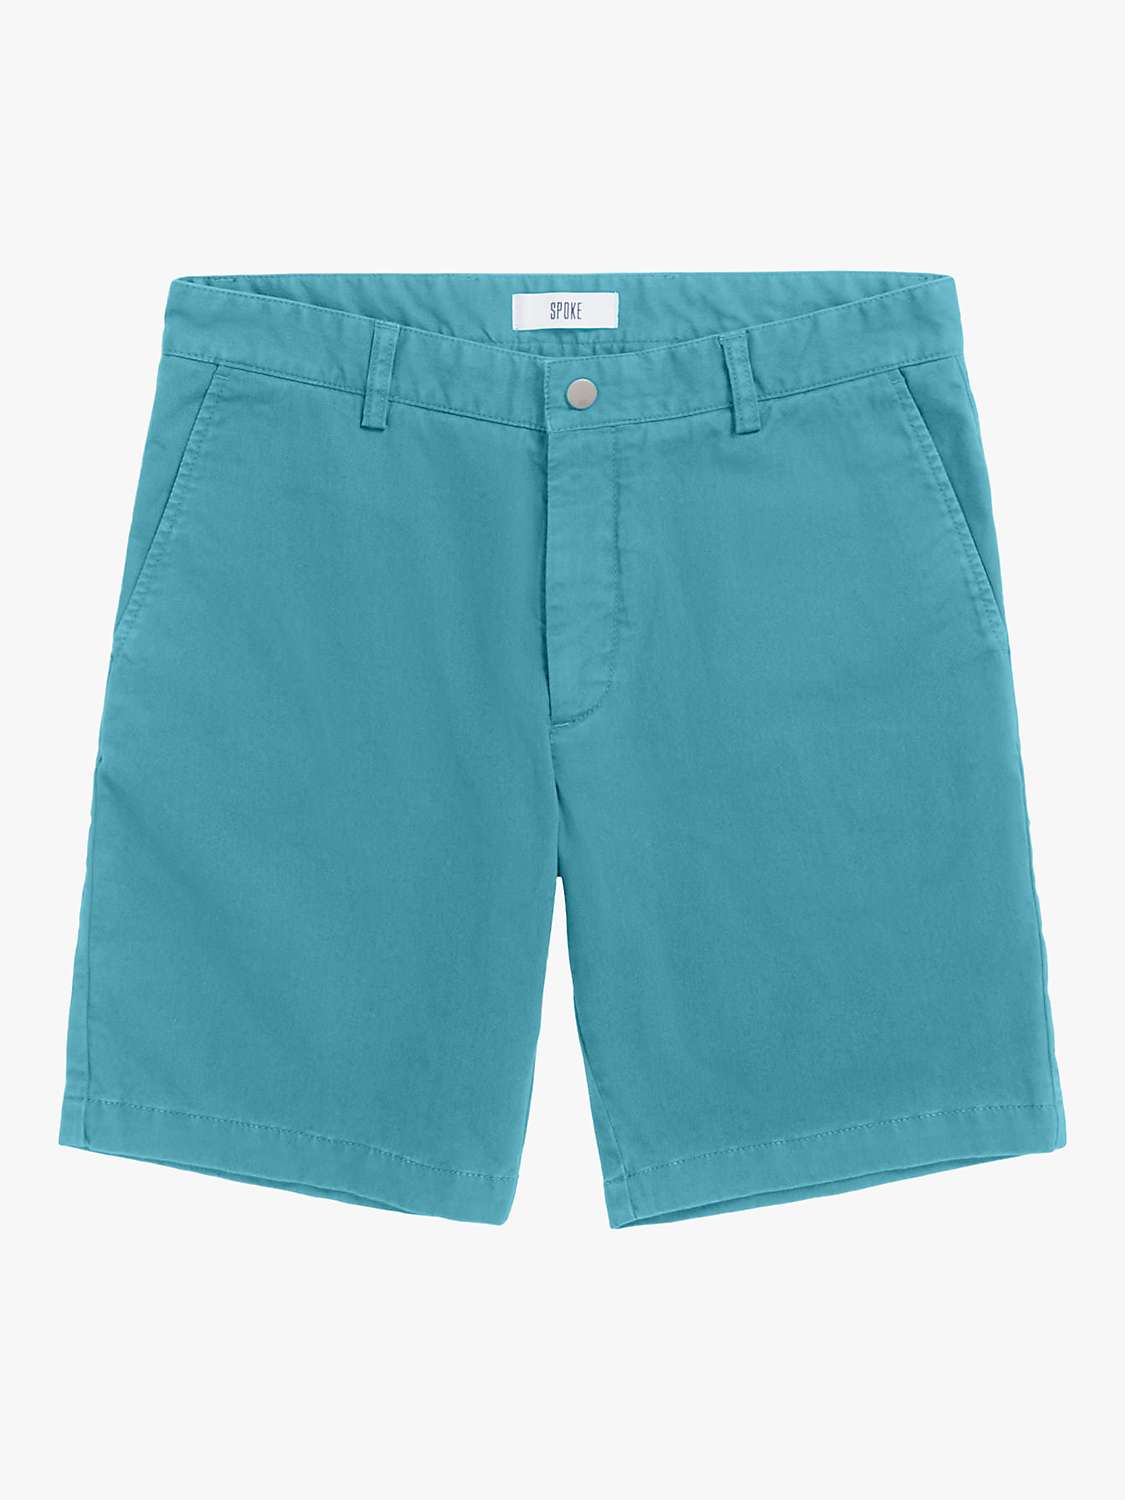 Buy SPOKE Hero Slim Thigh Shorts Online at johnlewis.com